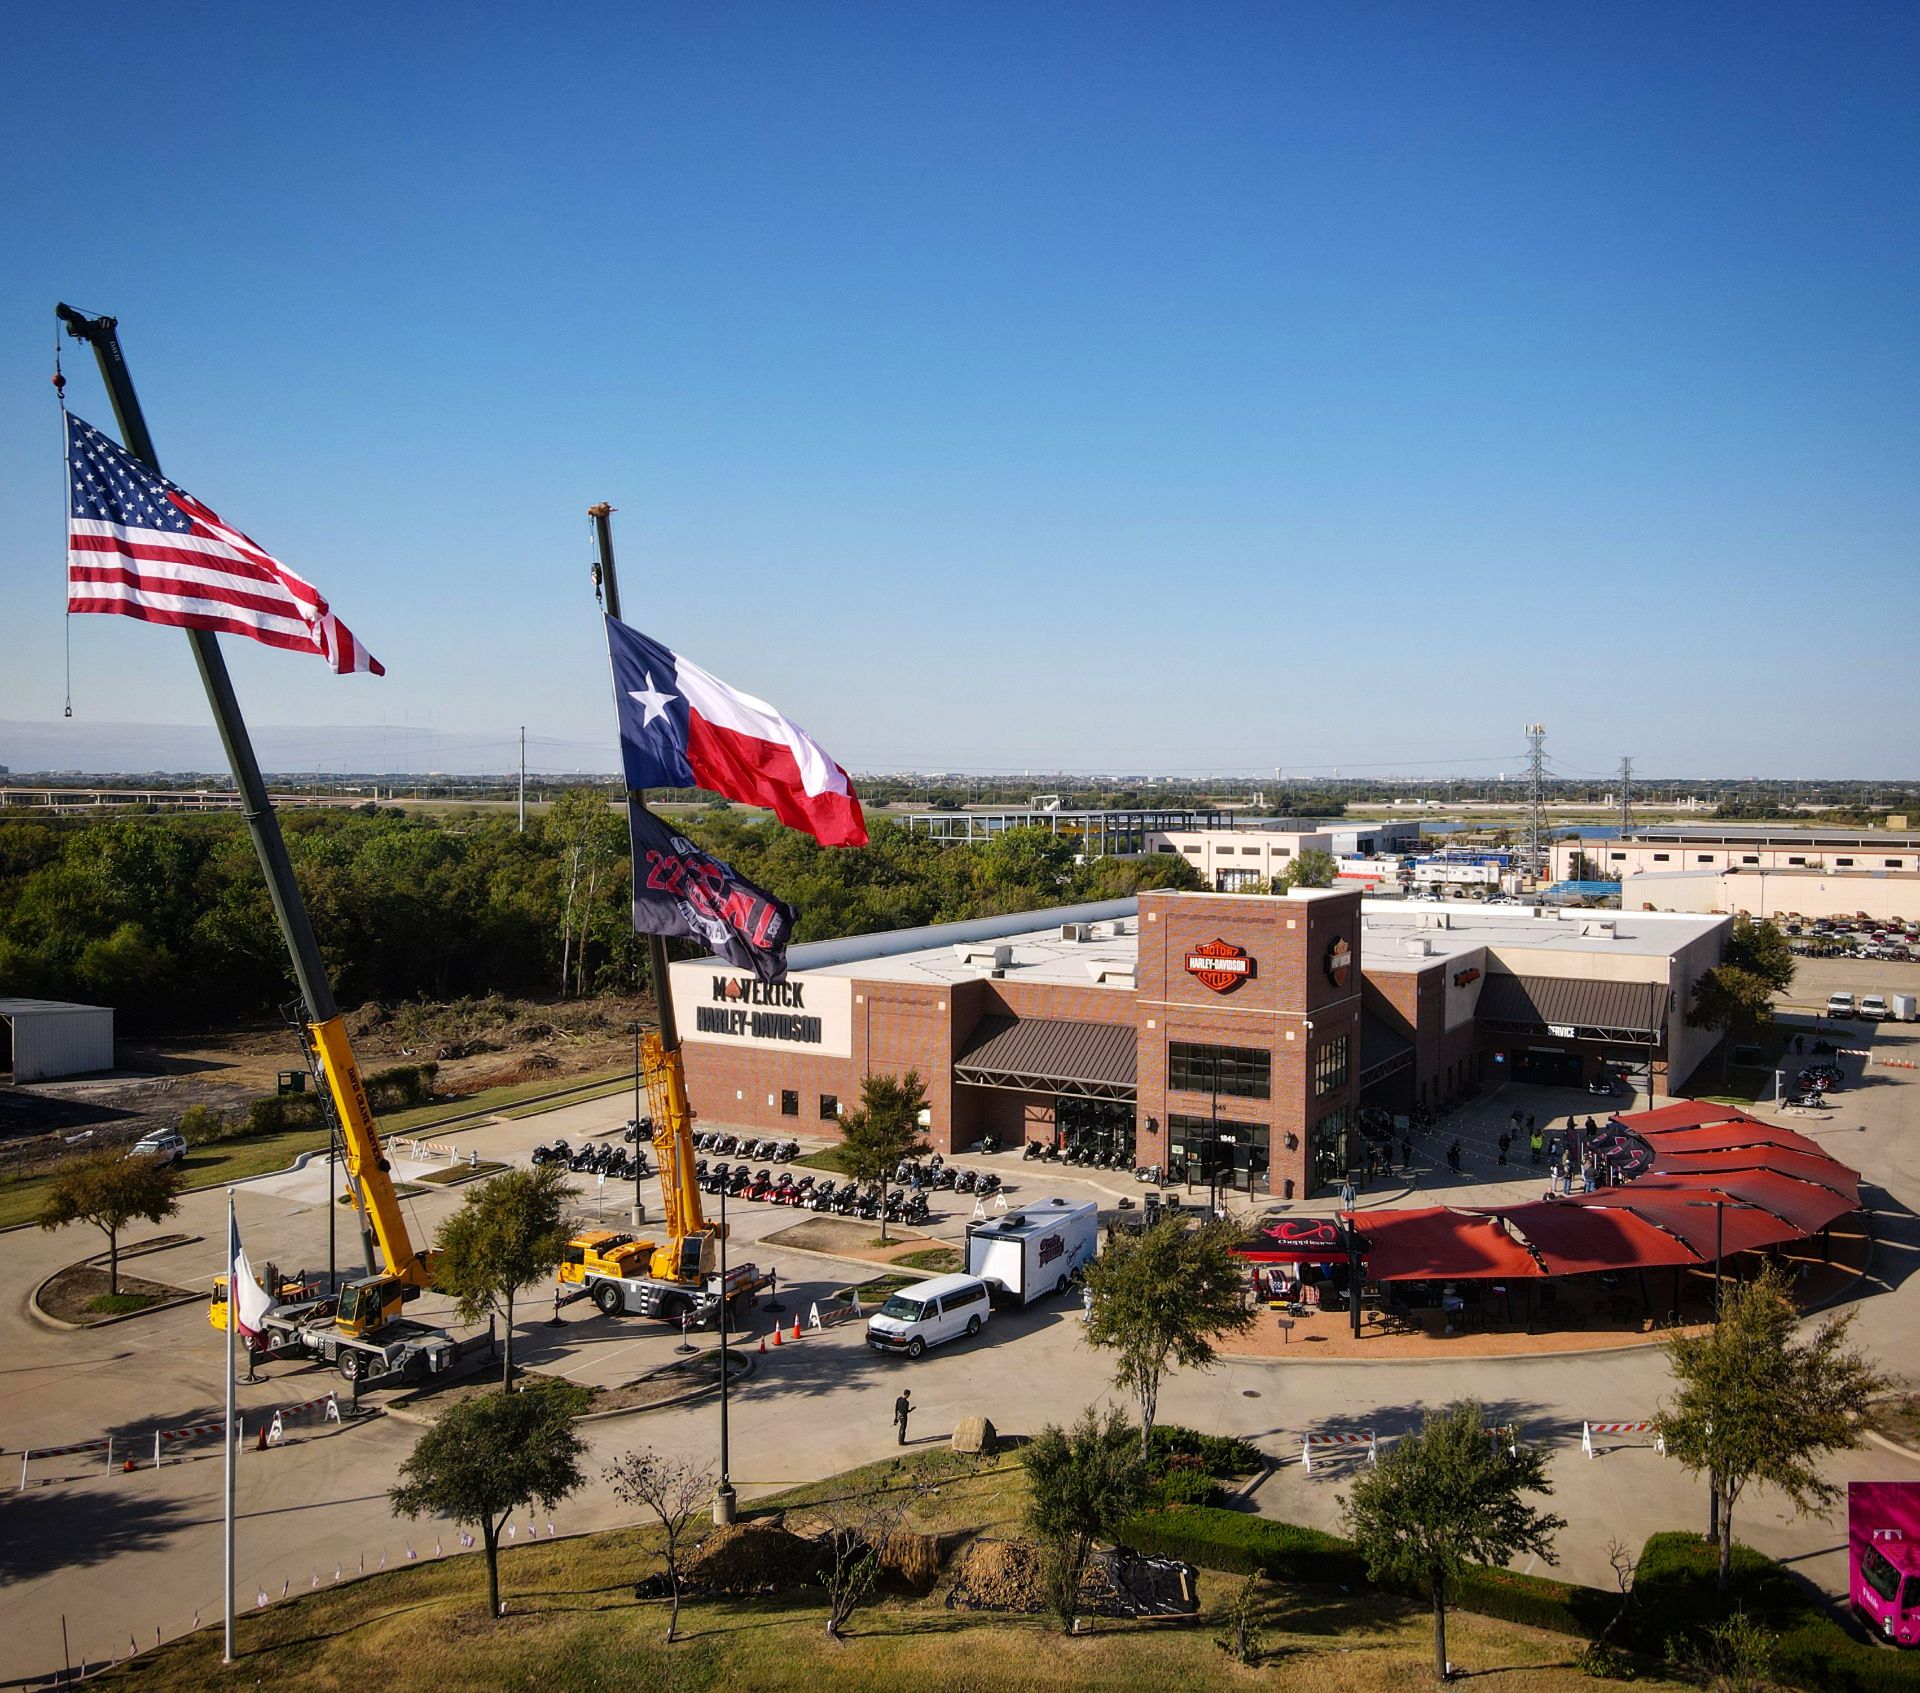 2019 Harley-Davidson Ultra Limited in Carrollton, Texas - Photo 6